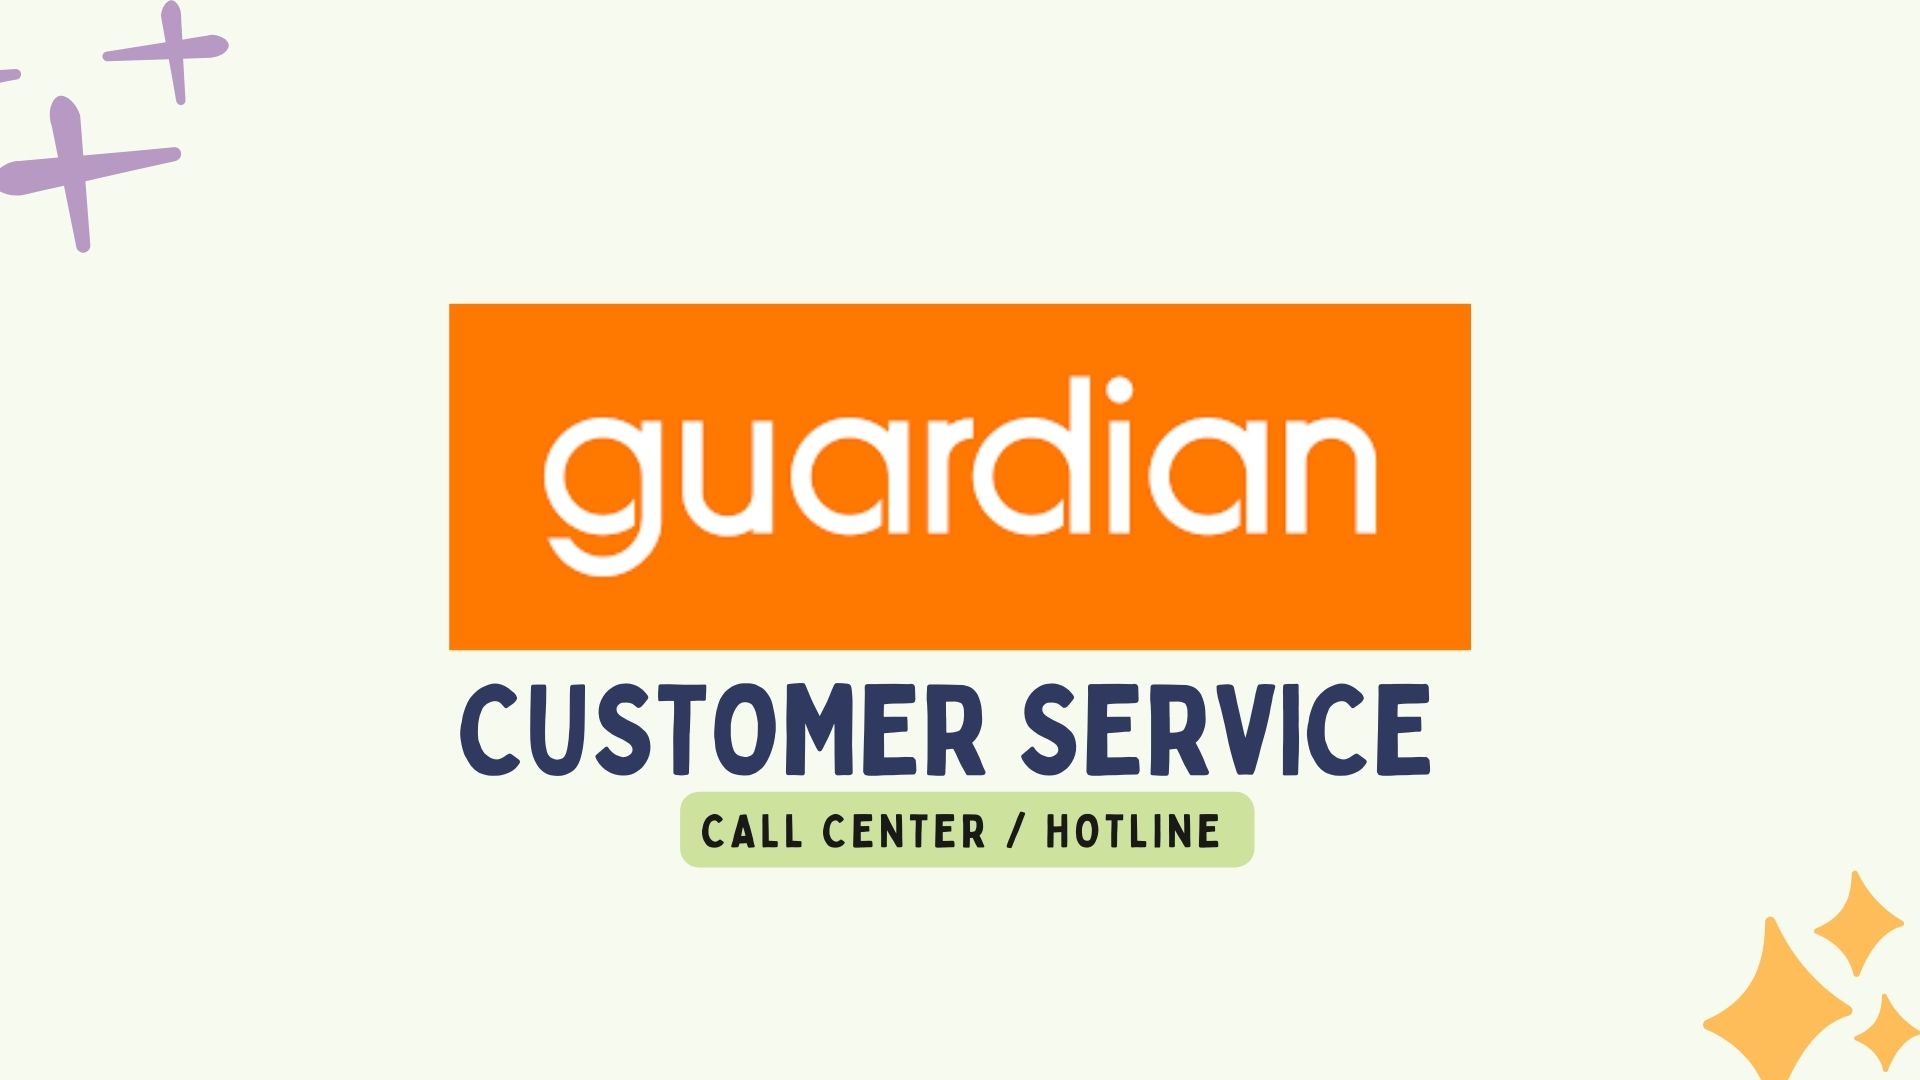 Guardian Customer Service